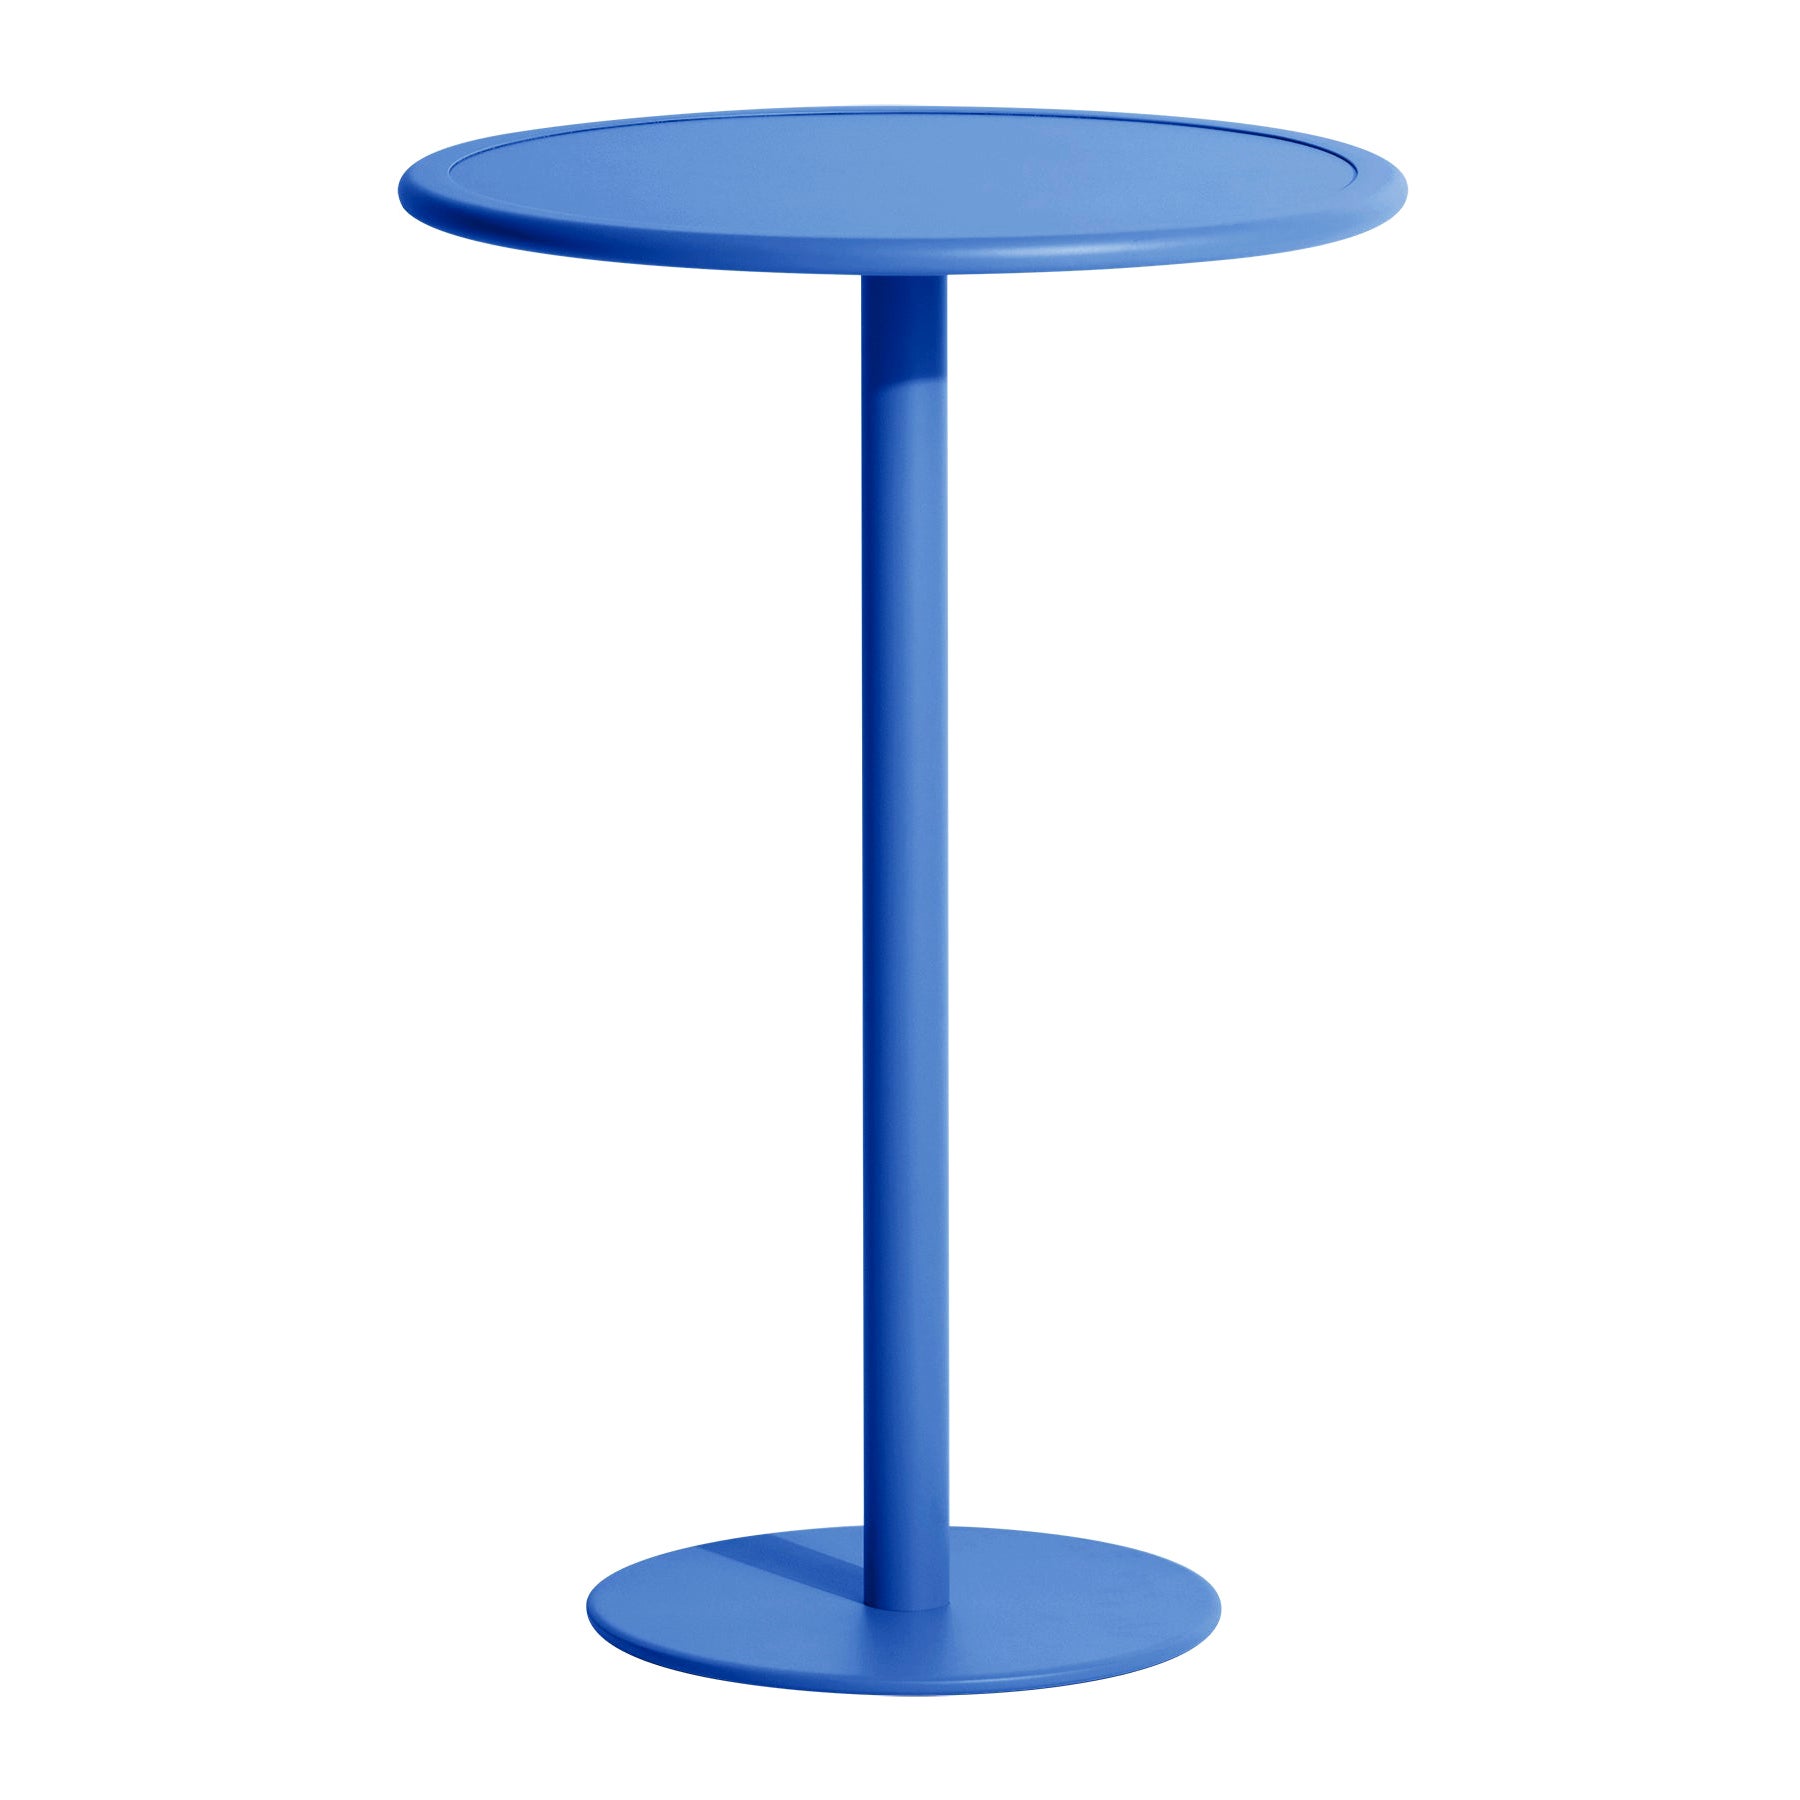 Petite table haute ronde Week-end en aluminium bleu de Friture, 2017 en vente